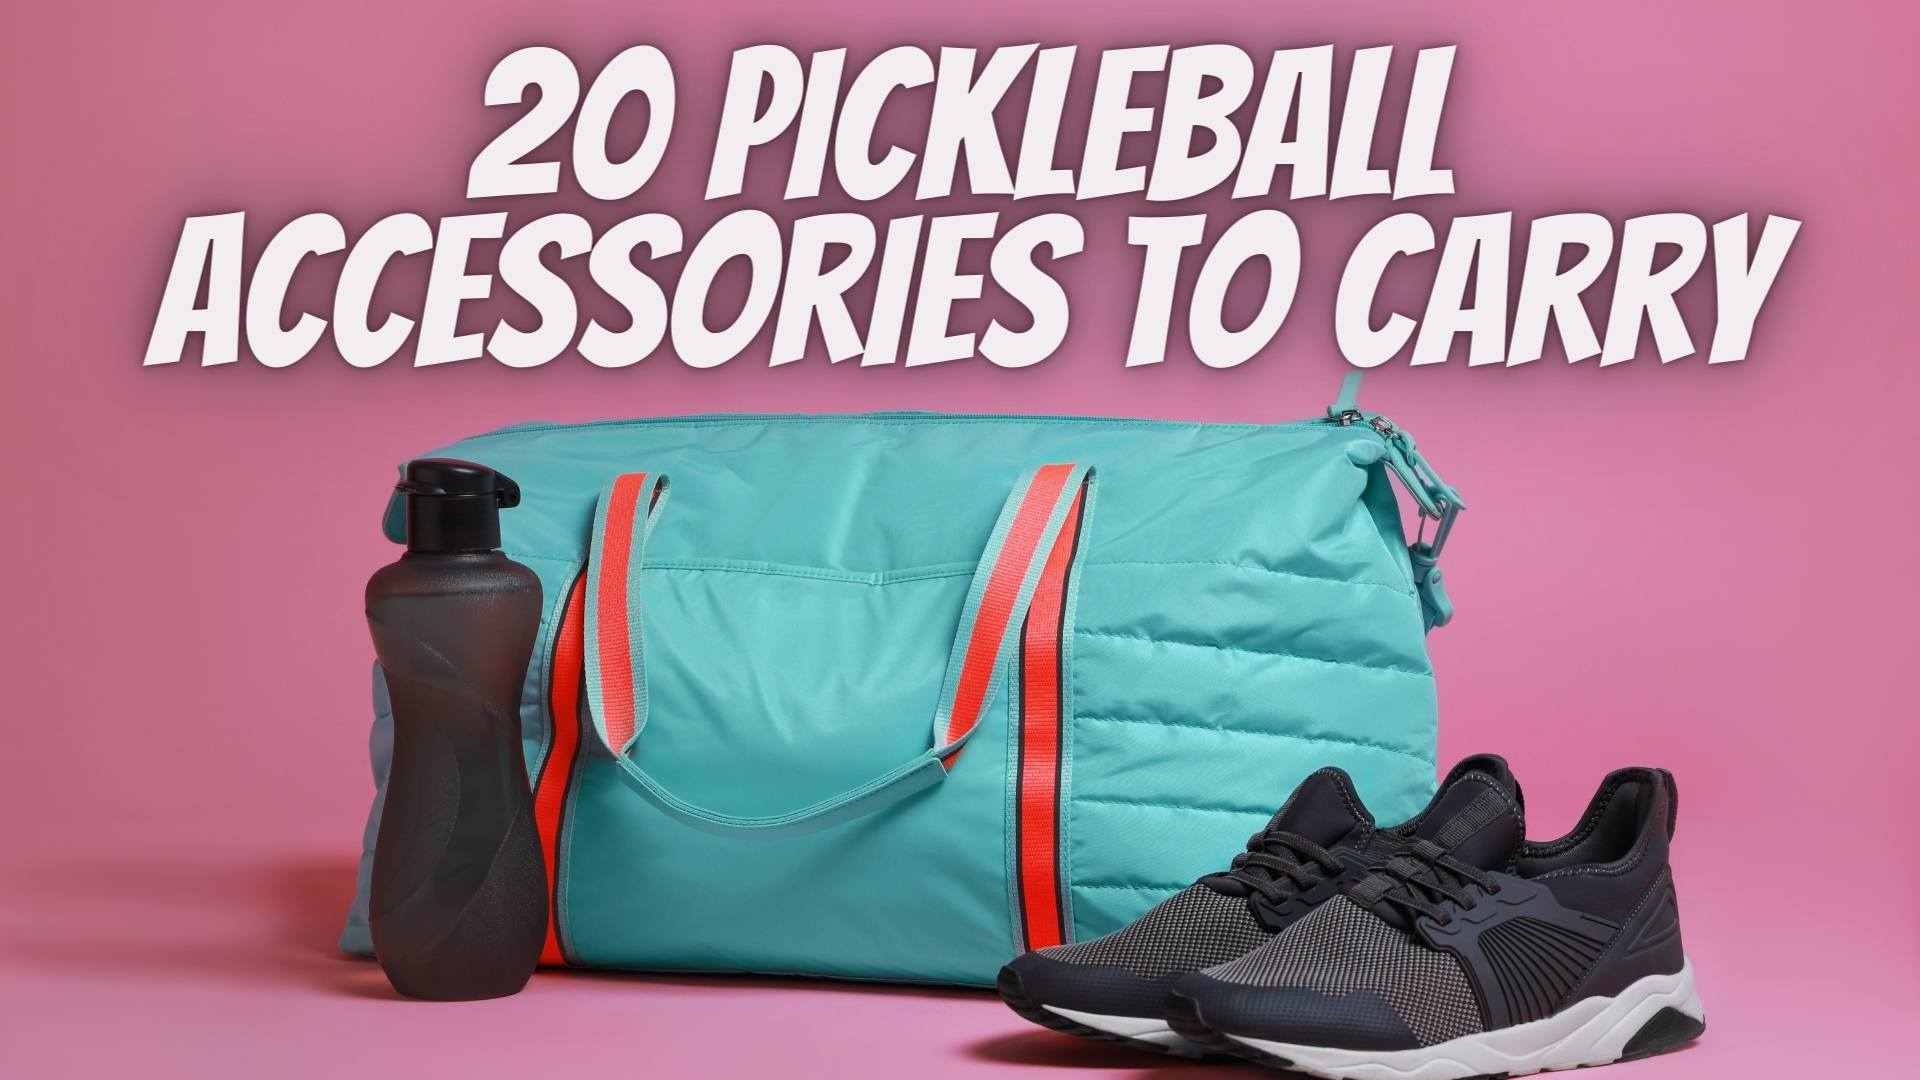 pickleball accessories